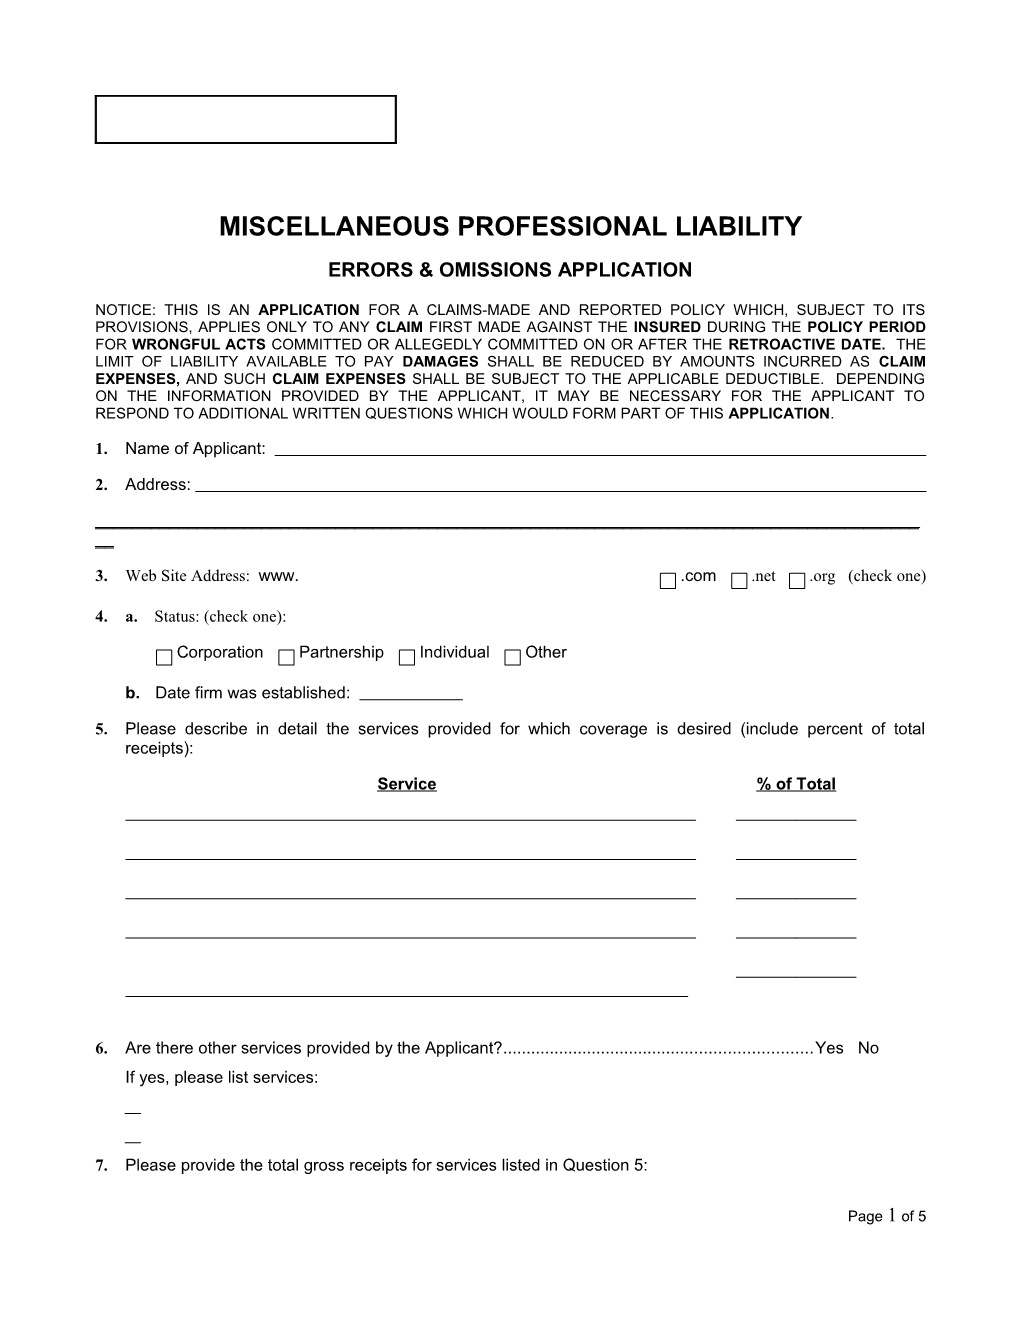 Miscellaneous Professional Liability